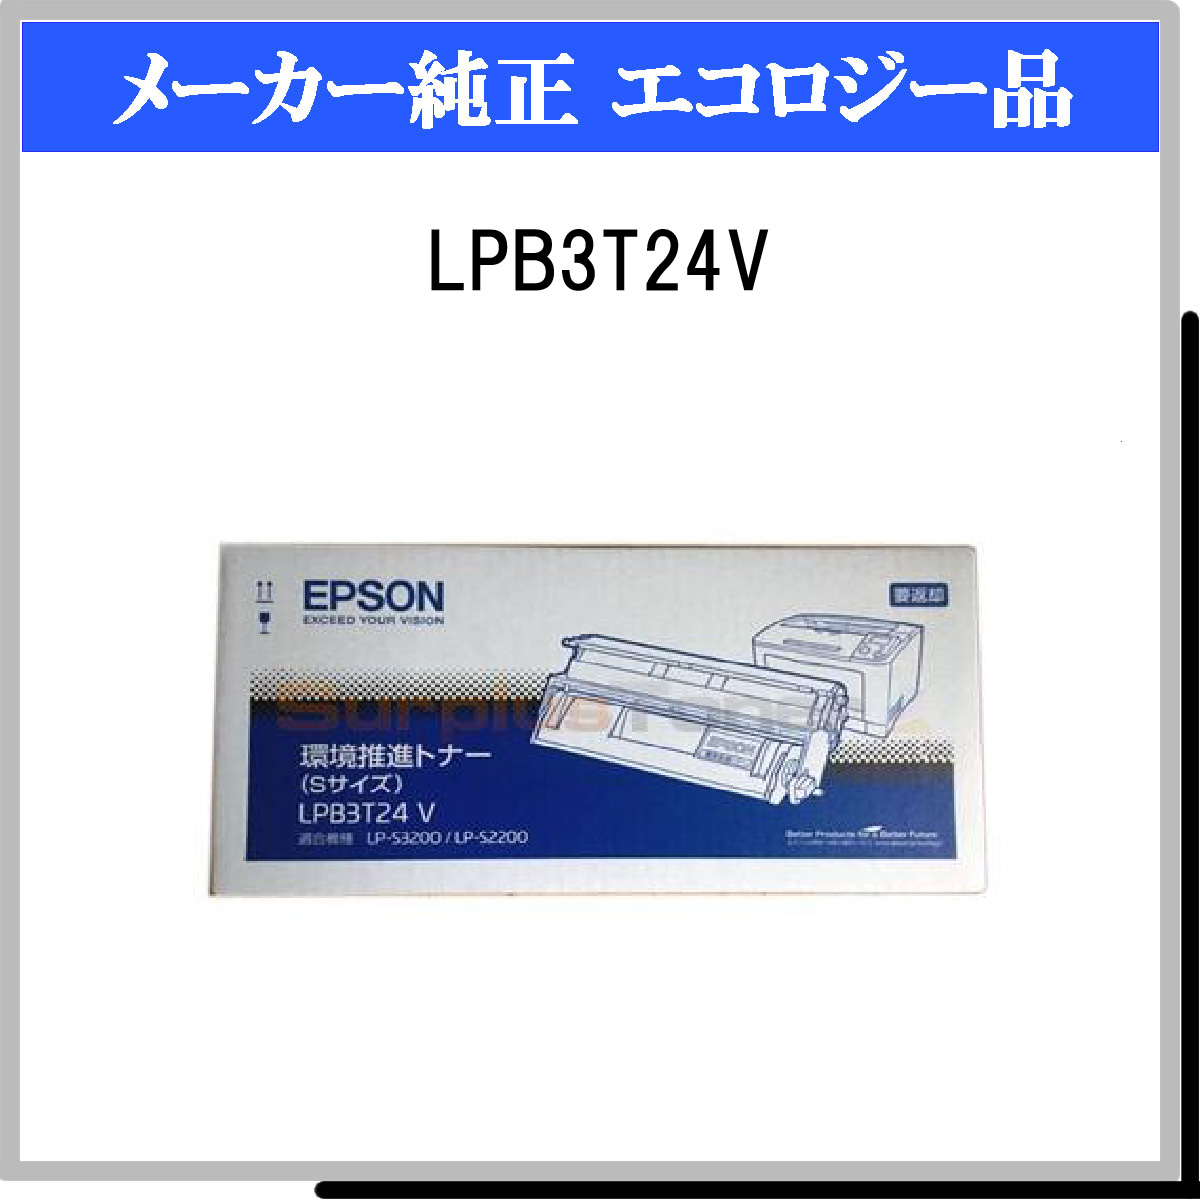 EPSON 環境推進トナーカートリッジLPB3T24V 純正品 LP-S2200 LP-S3200 - 2